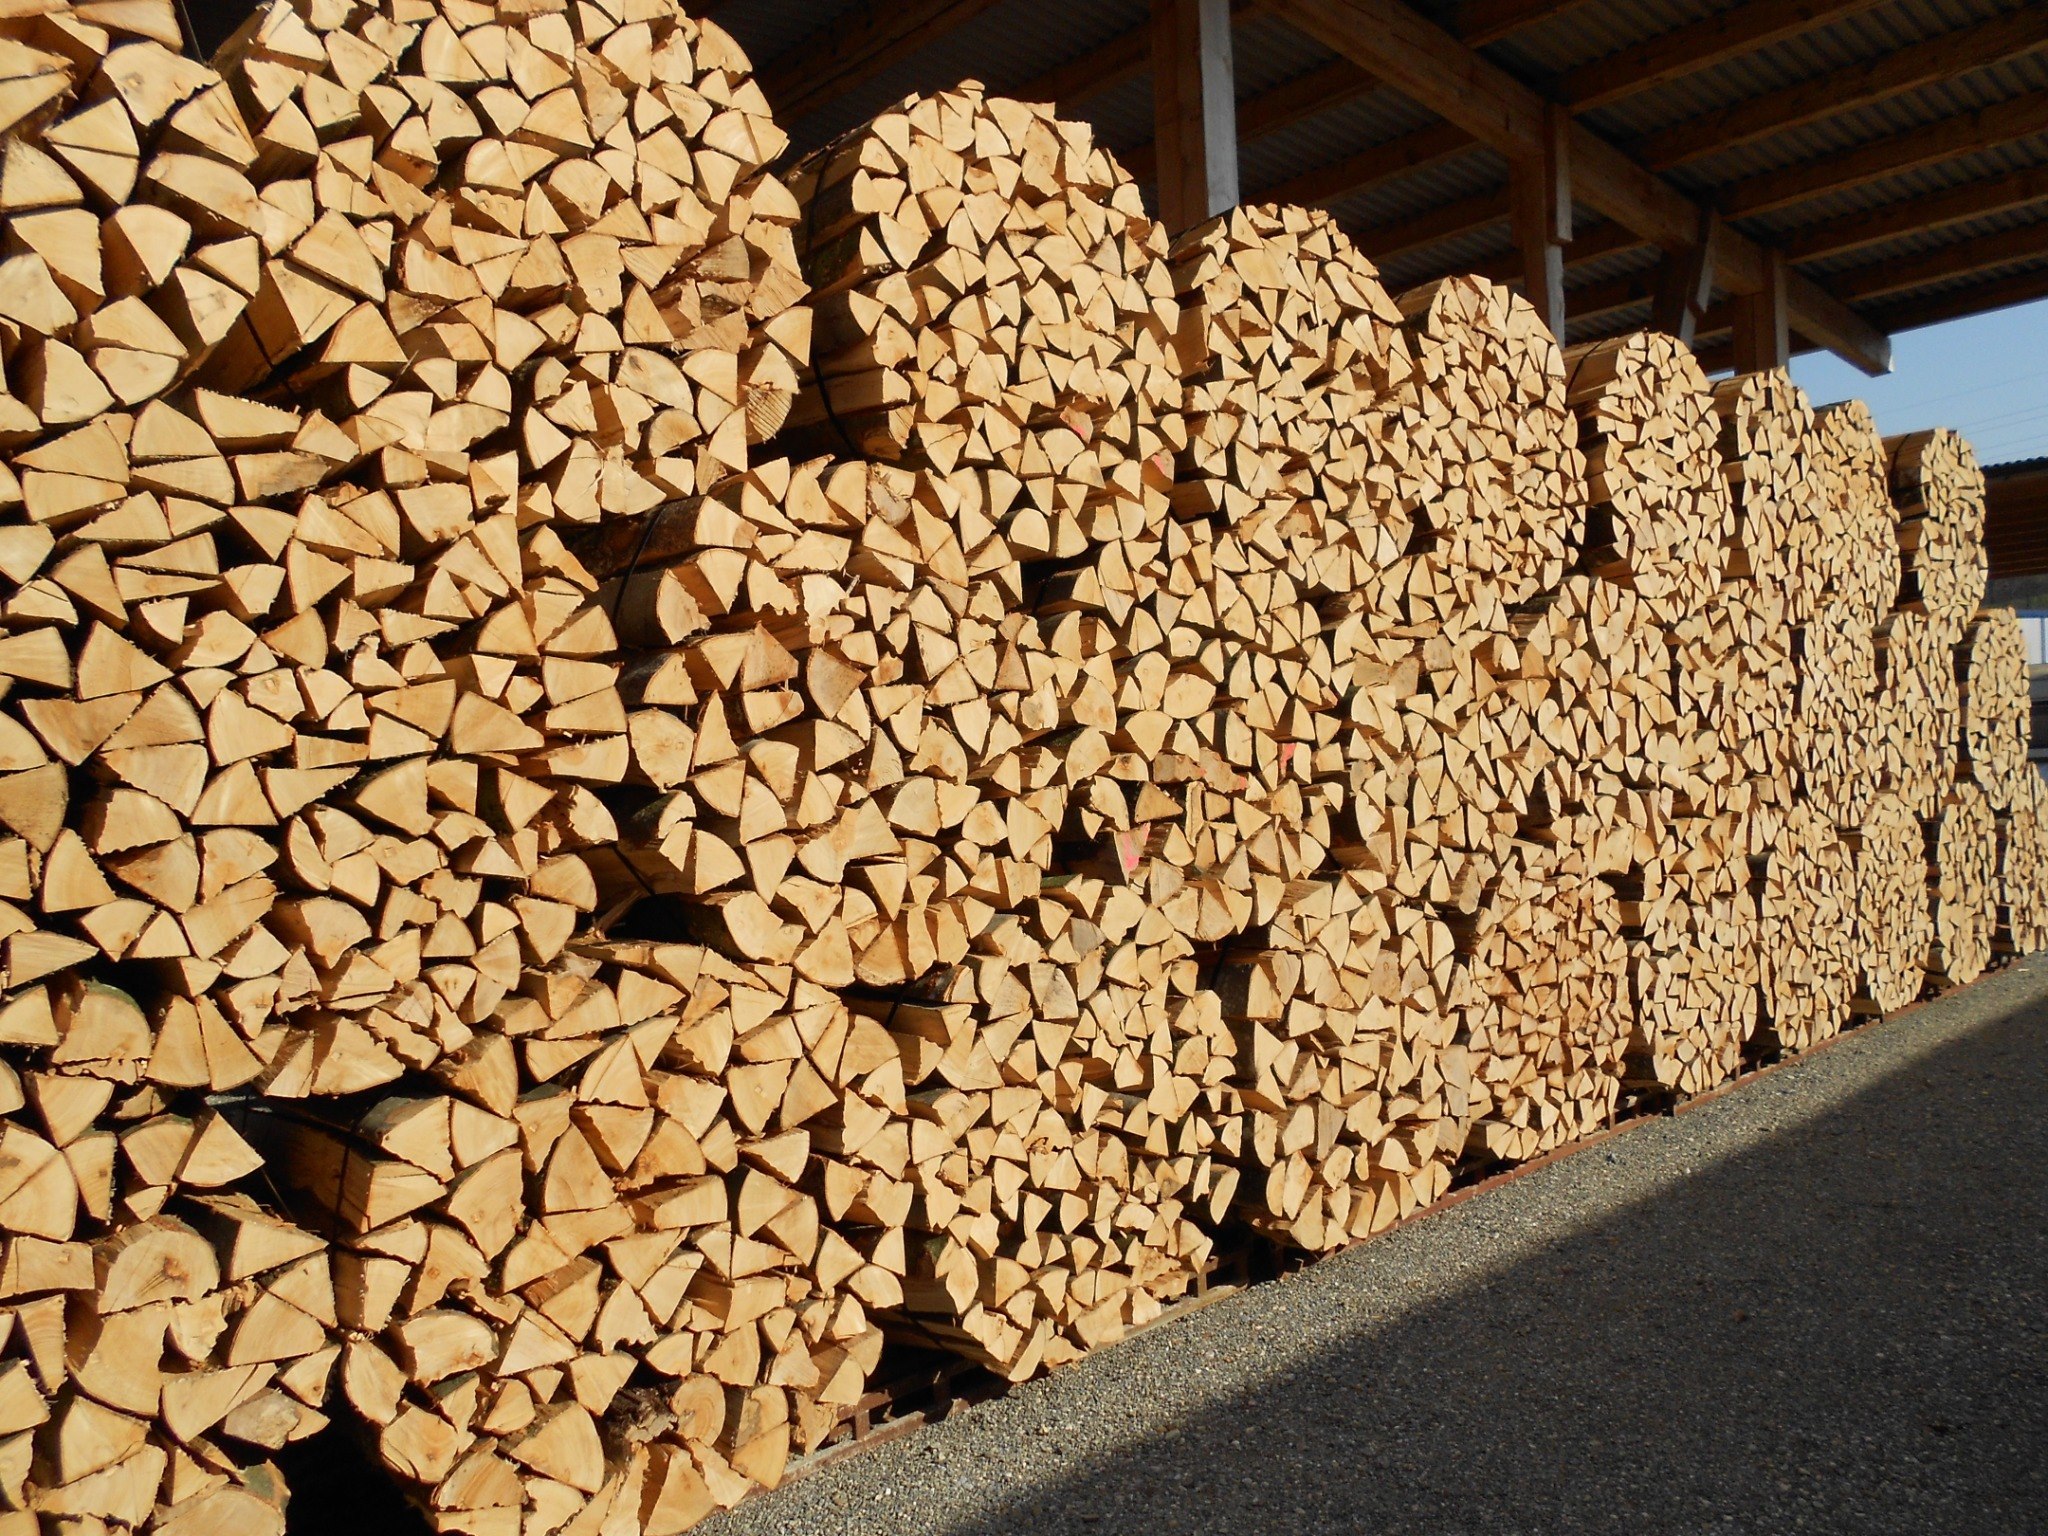 Buchenholz als Brennholz